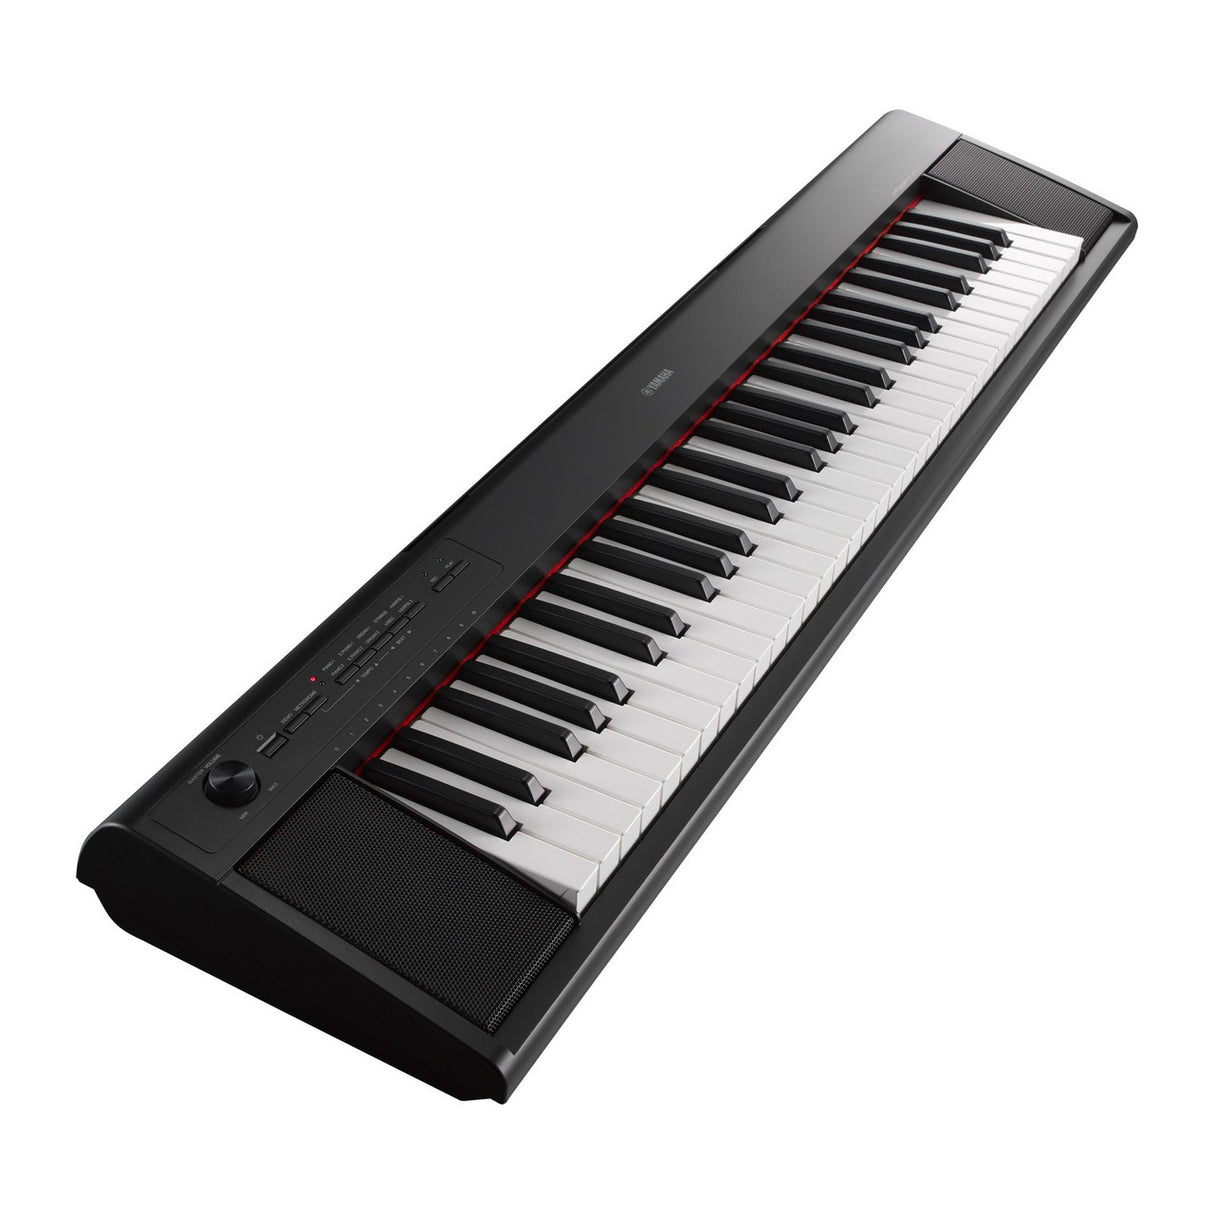 Yamaha NP12B 61-Key Entry Level Piaggero Portable Digital Piano, Black